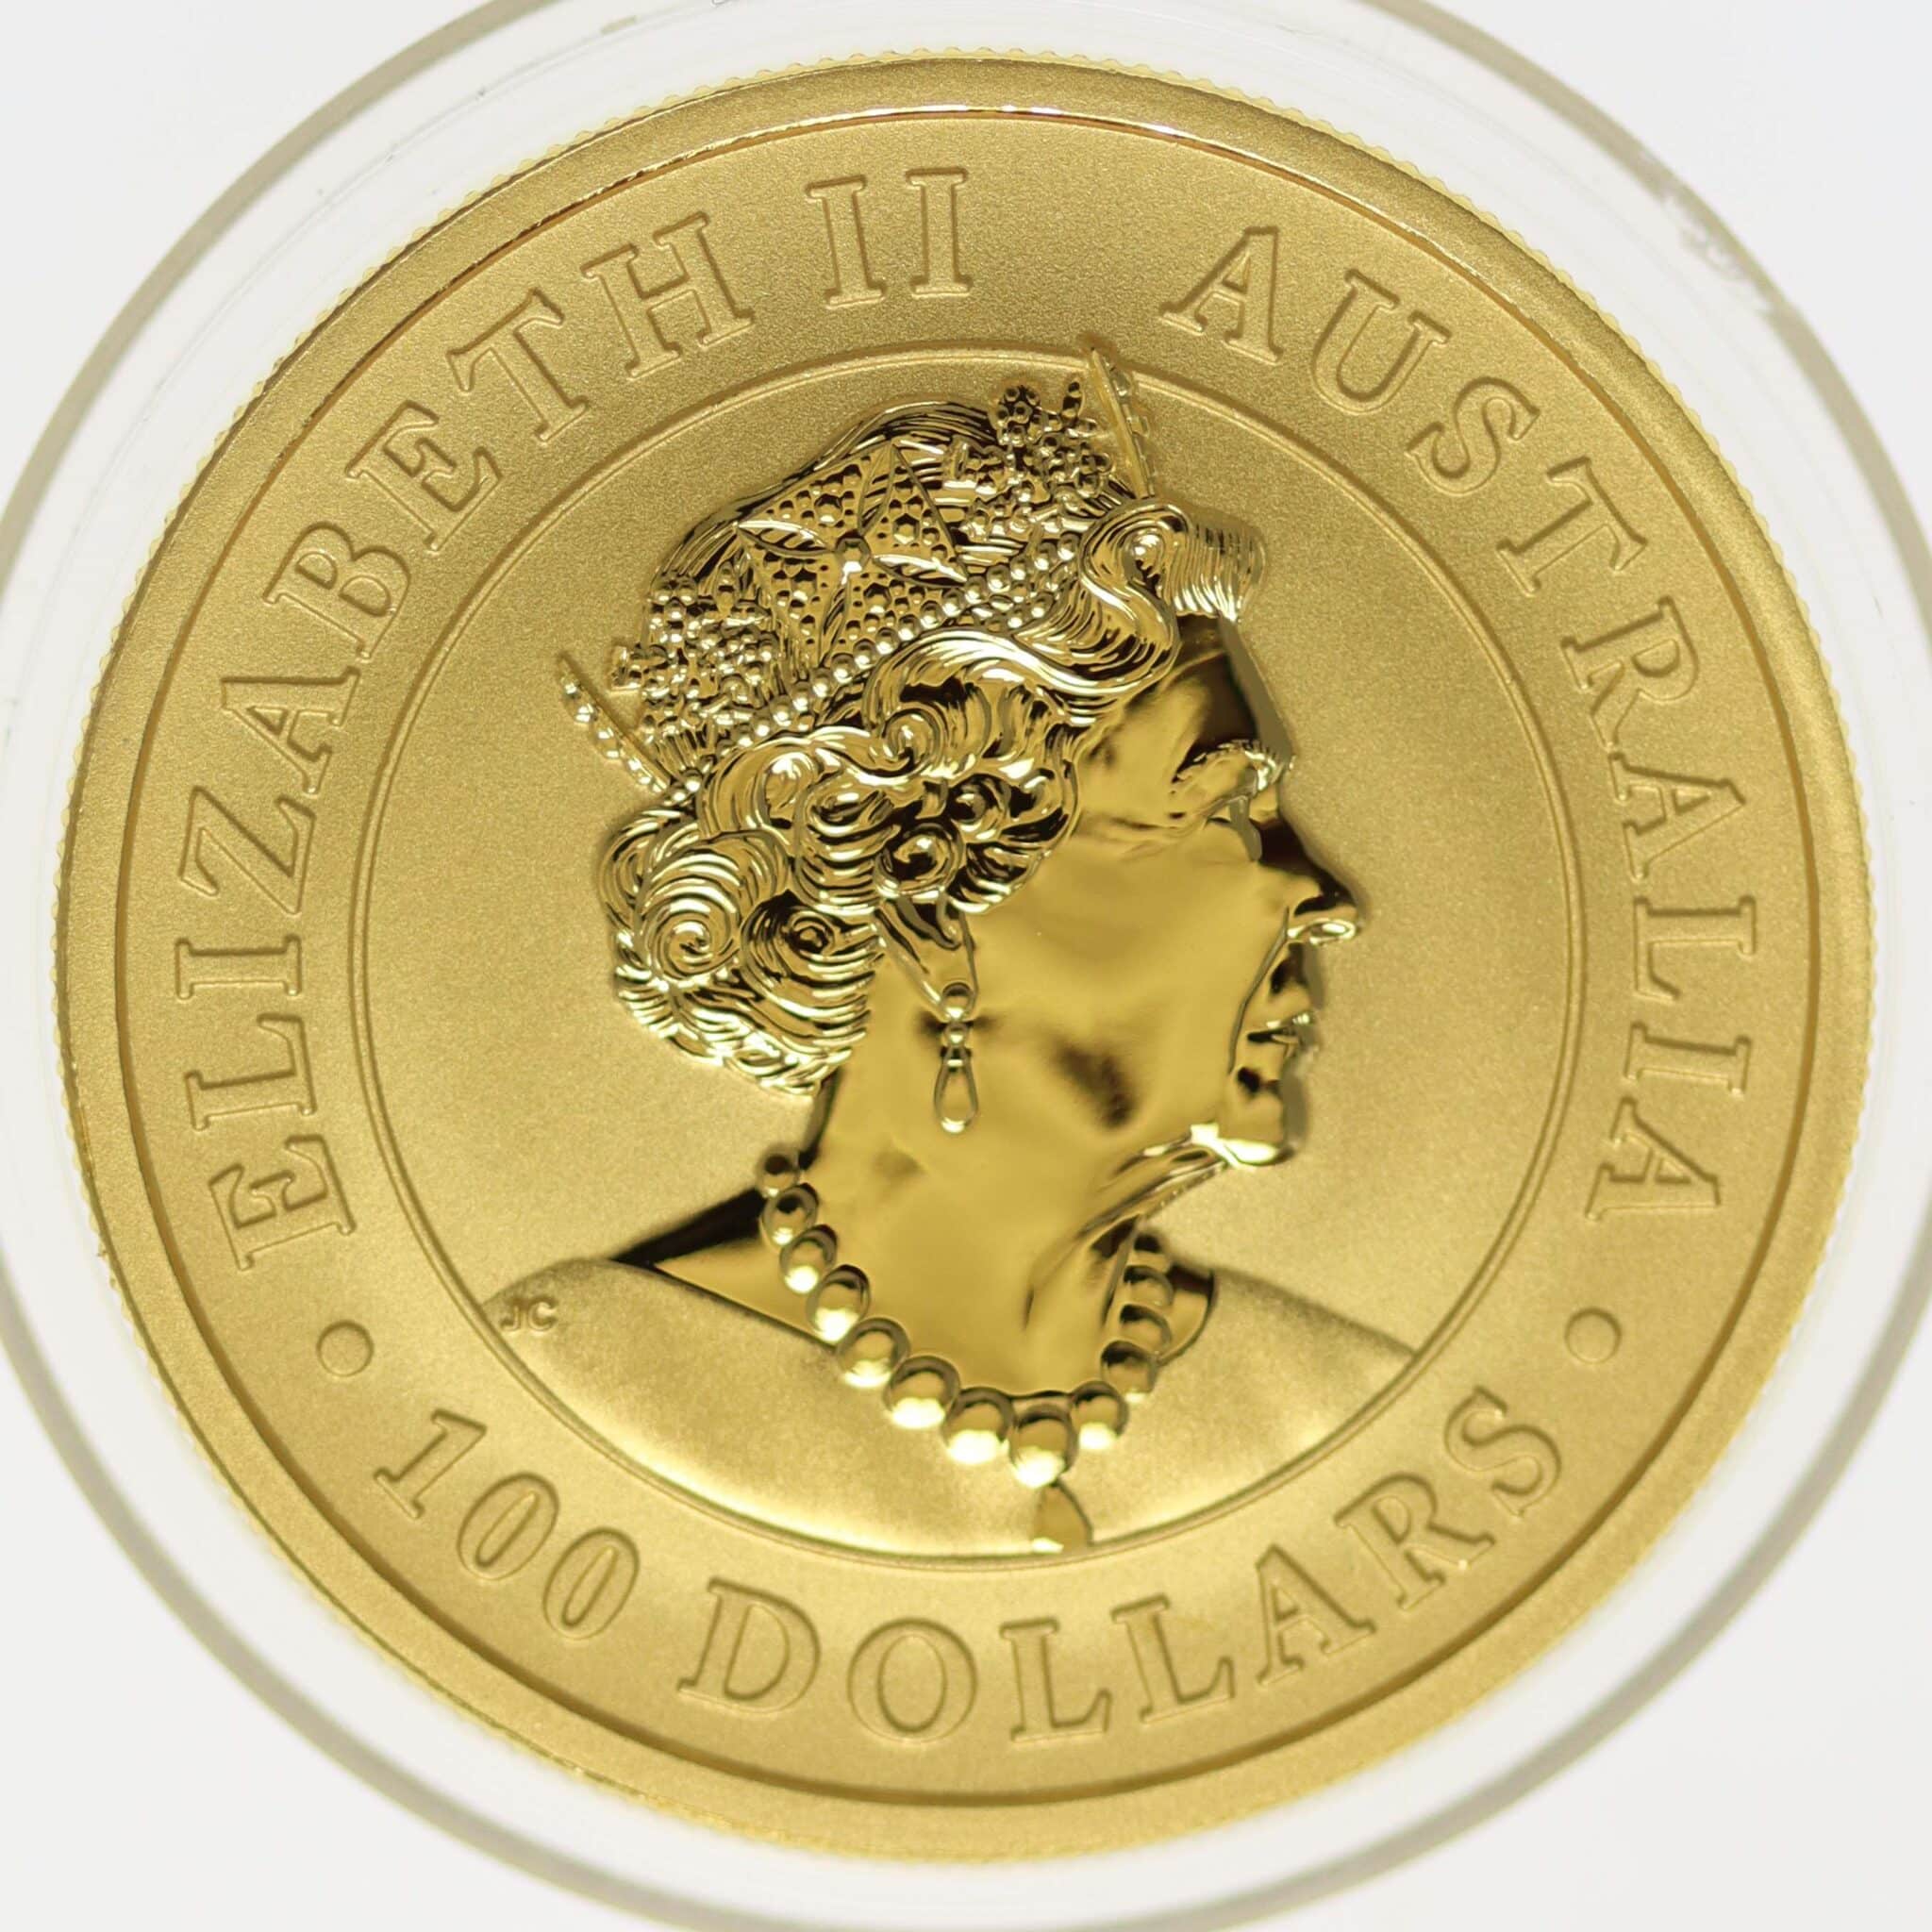 australien - Australien Elisabeth II. 100 Dollars 2019 Nugget